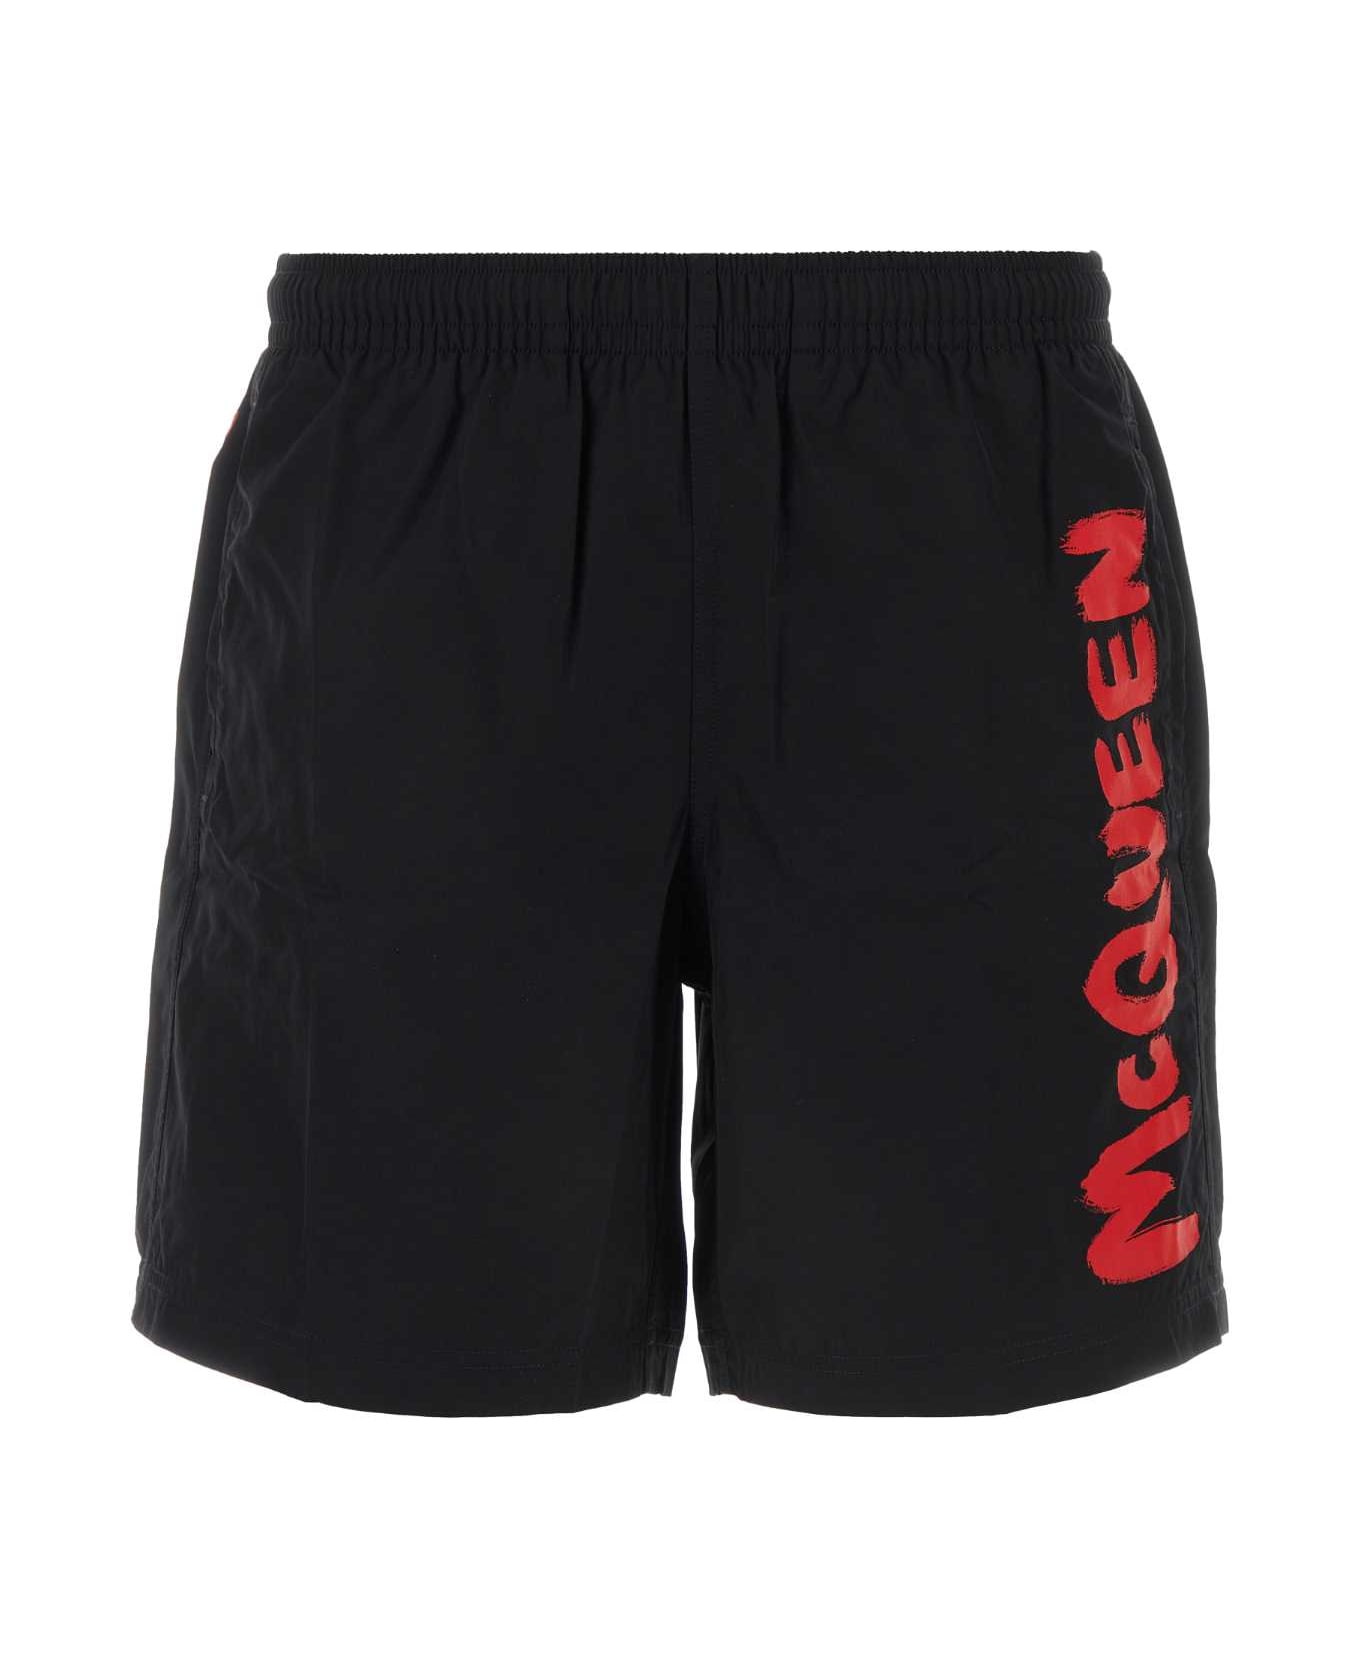 Alexander McQueen Black Nylon Swimming Shorts - BLACKLUSTRED 水着